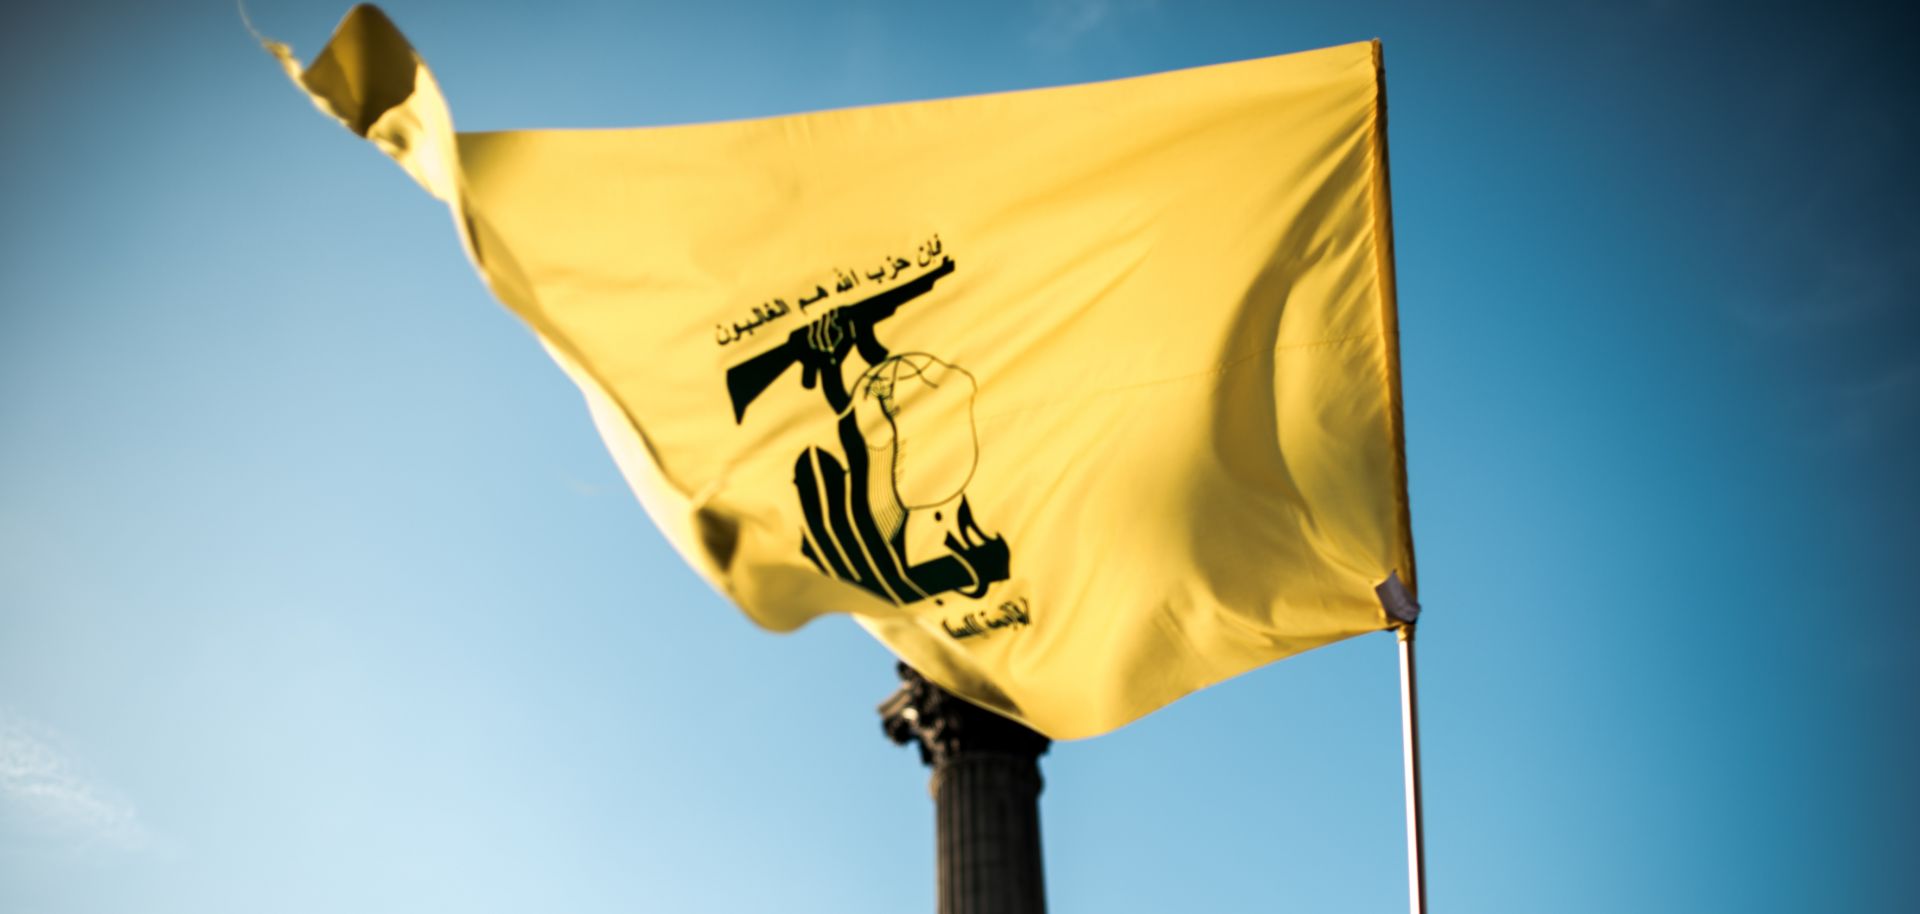 A Hezbollah flag seen in Trafalgar Square during the demonstration.